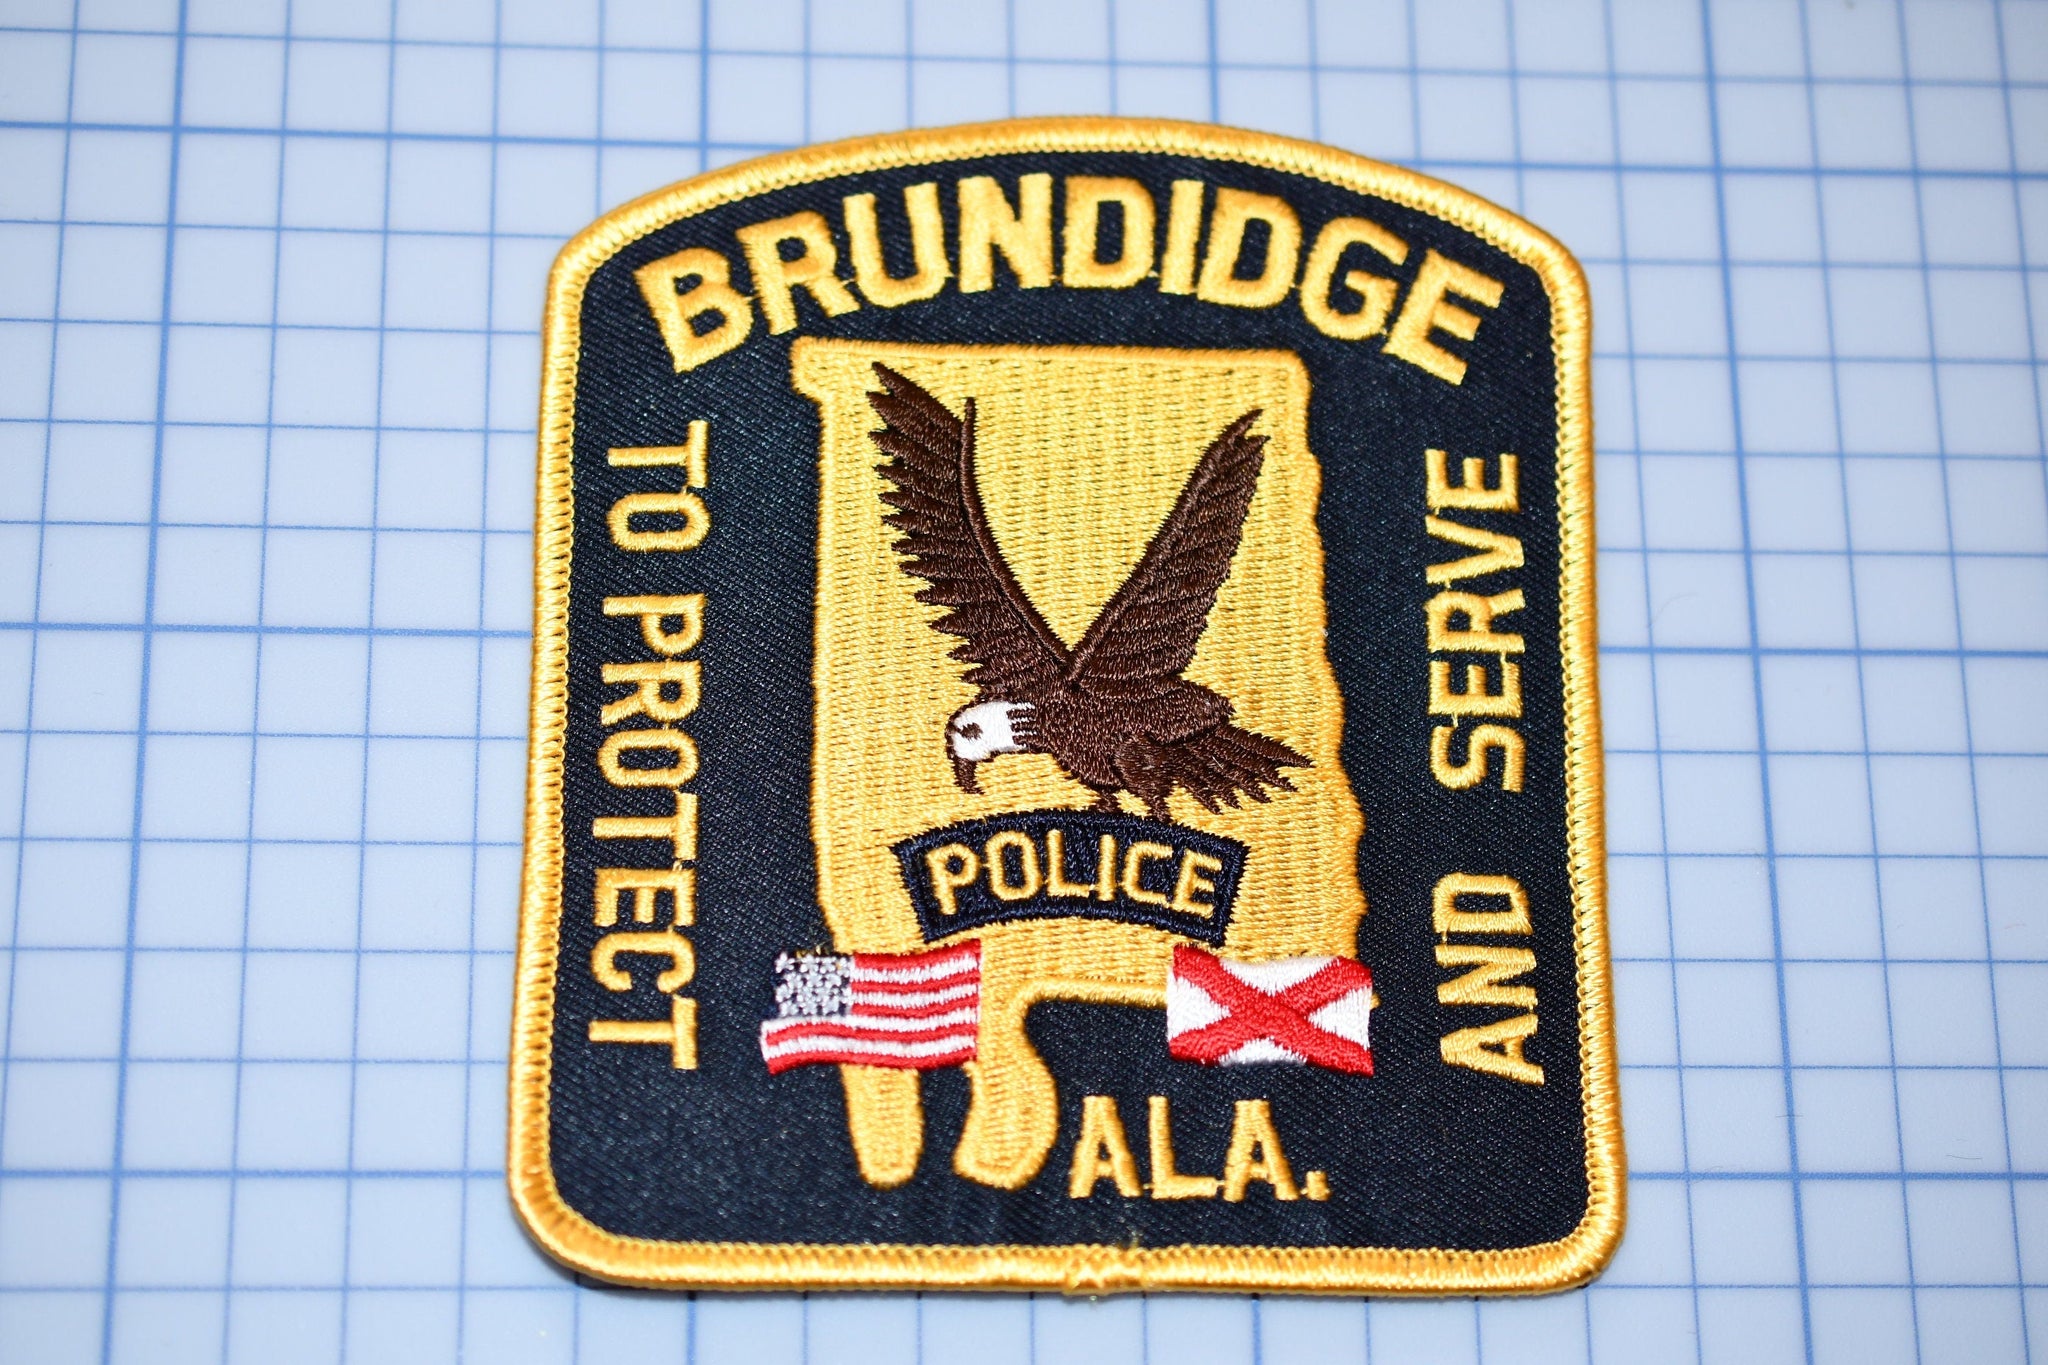 Brundidge Alabama Police Patch (B23-171)